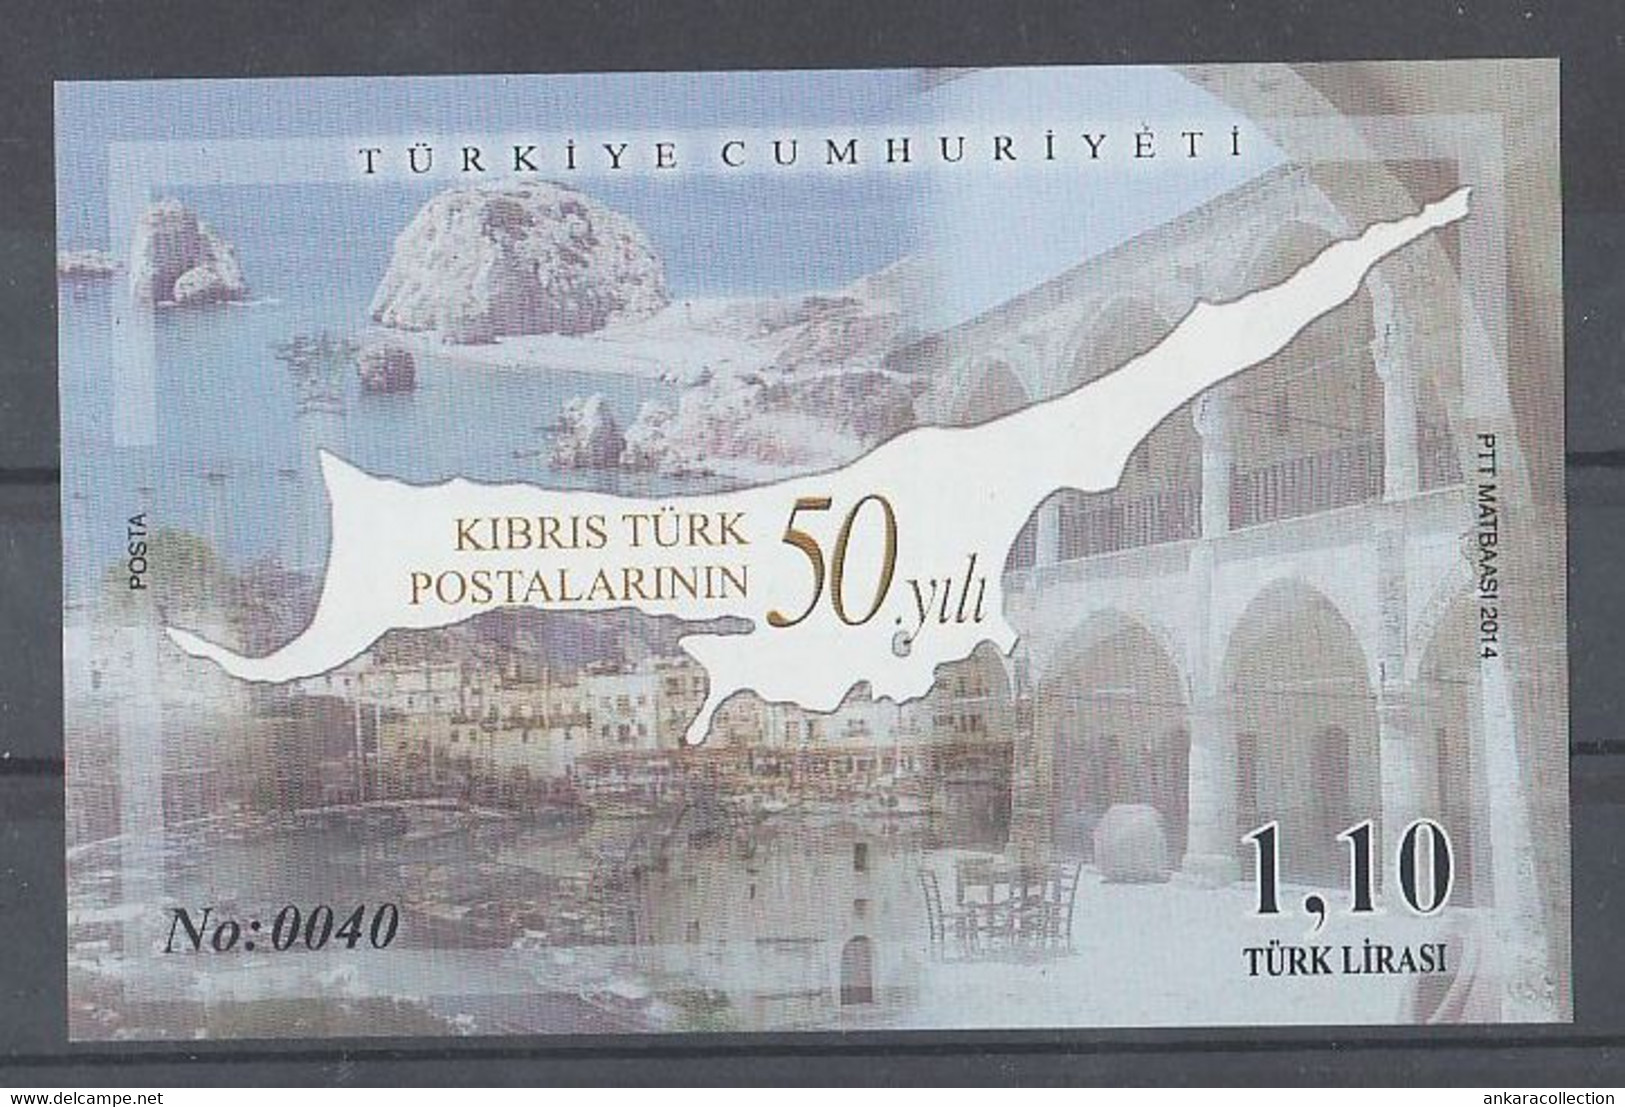 AC - TURKEY STAMP - 50th YEAR OF CYPRUS TURK POSTS MNH NUMBERED BLOCK ANKARA 06 JANUARY 2014 - Carnets